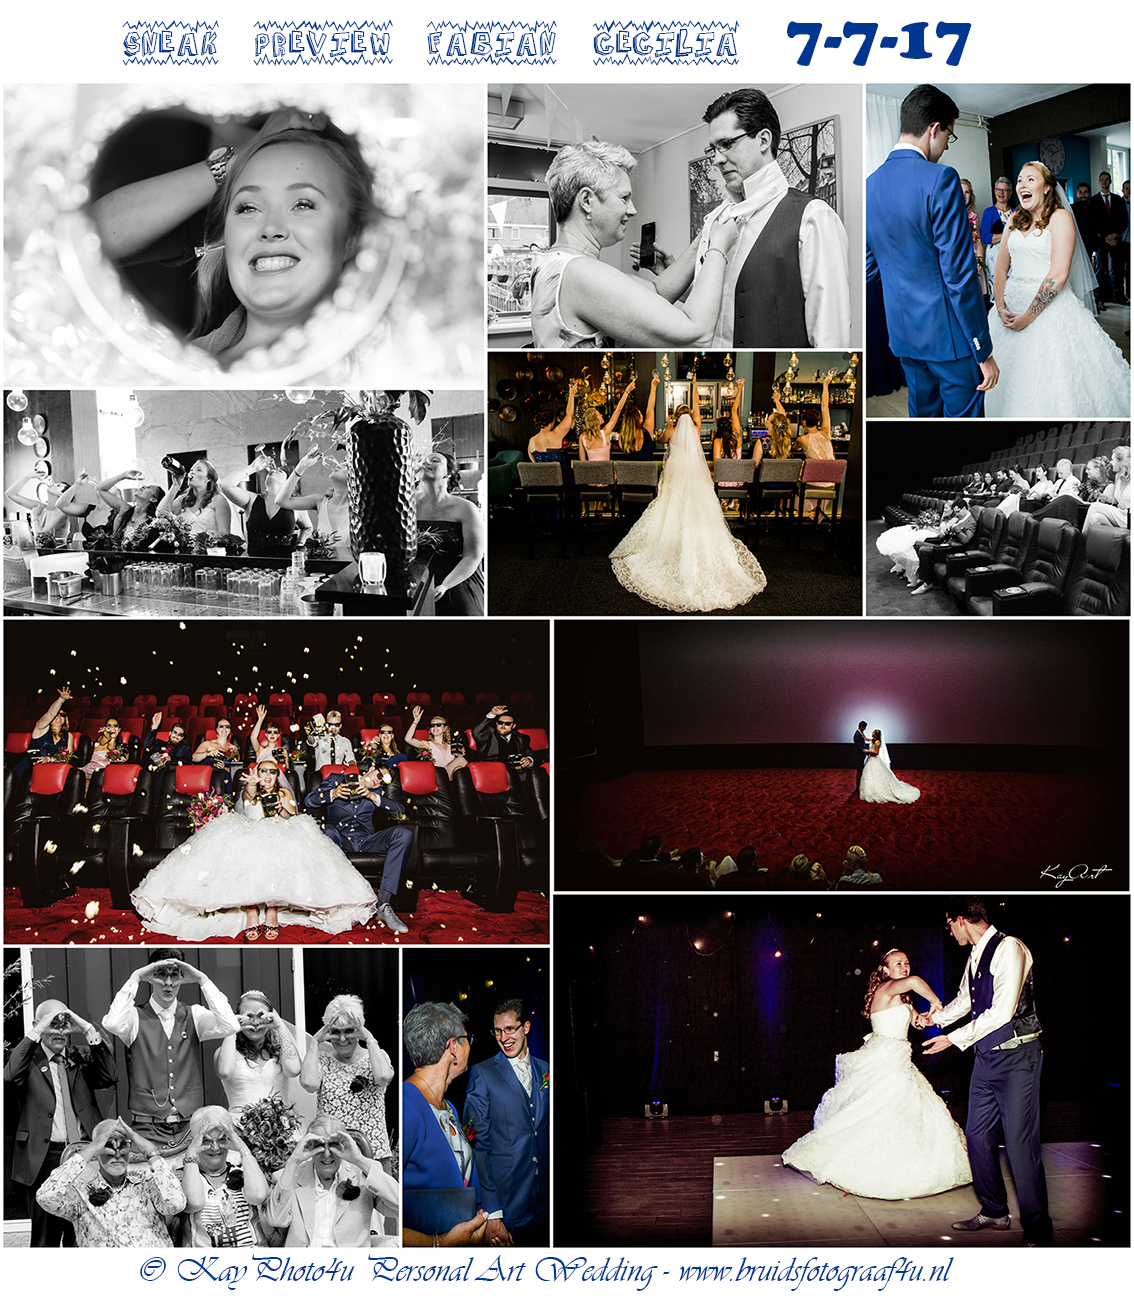 sneak-preview-fabian-cecilia-7-7-17-copyright-kayphoto4u-personal-art-wedding